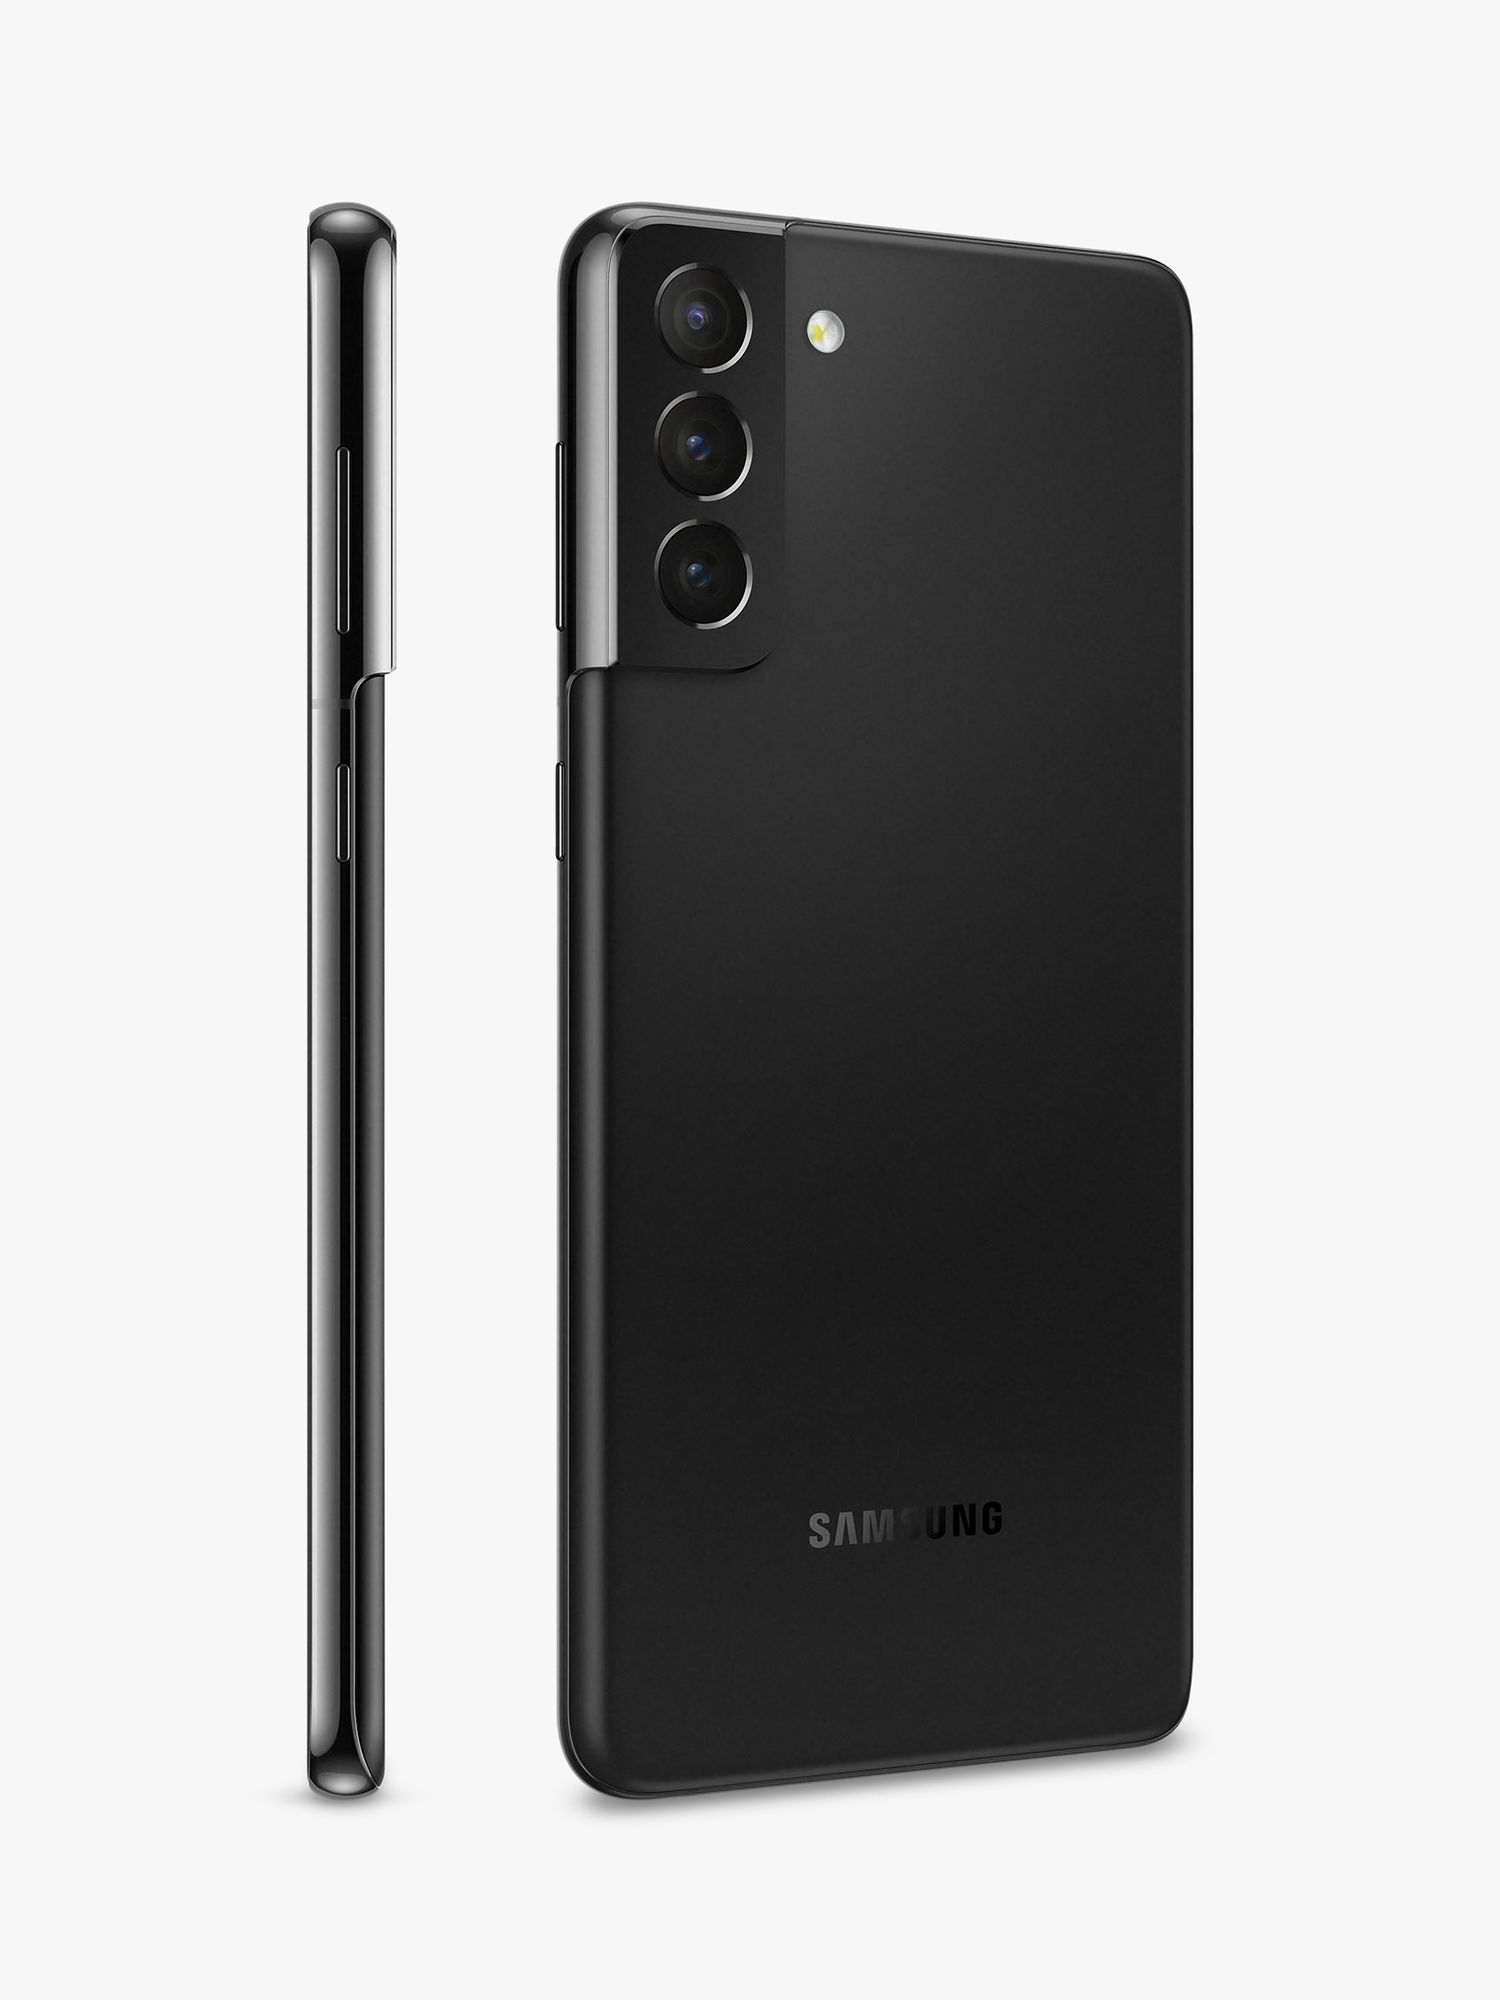 Samsung Galaxy S21 Plus 5g Smartphone With Wireless Powershare 8gb Ram 6 7 5g Sim Free 128gb